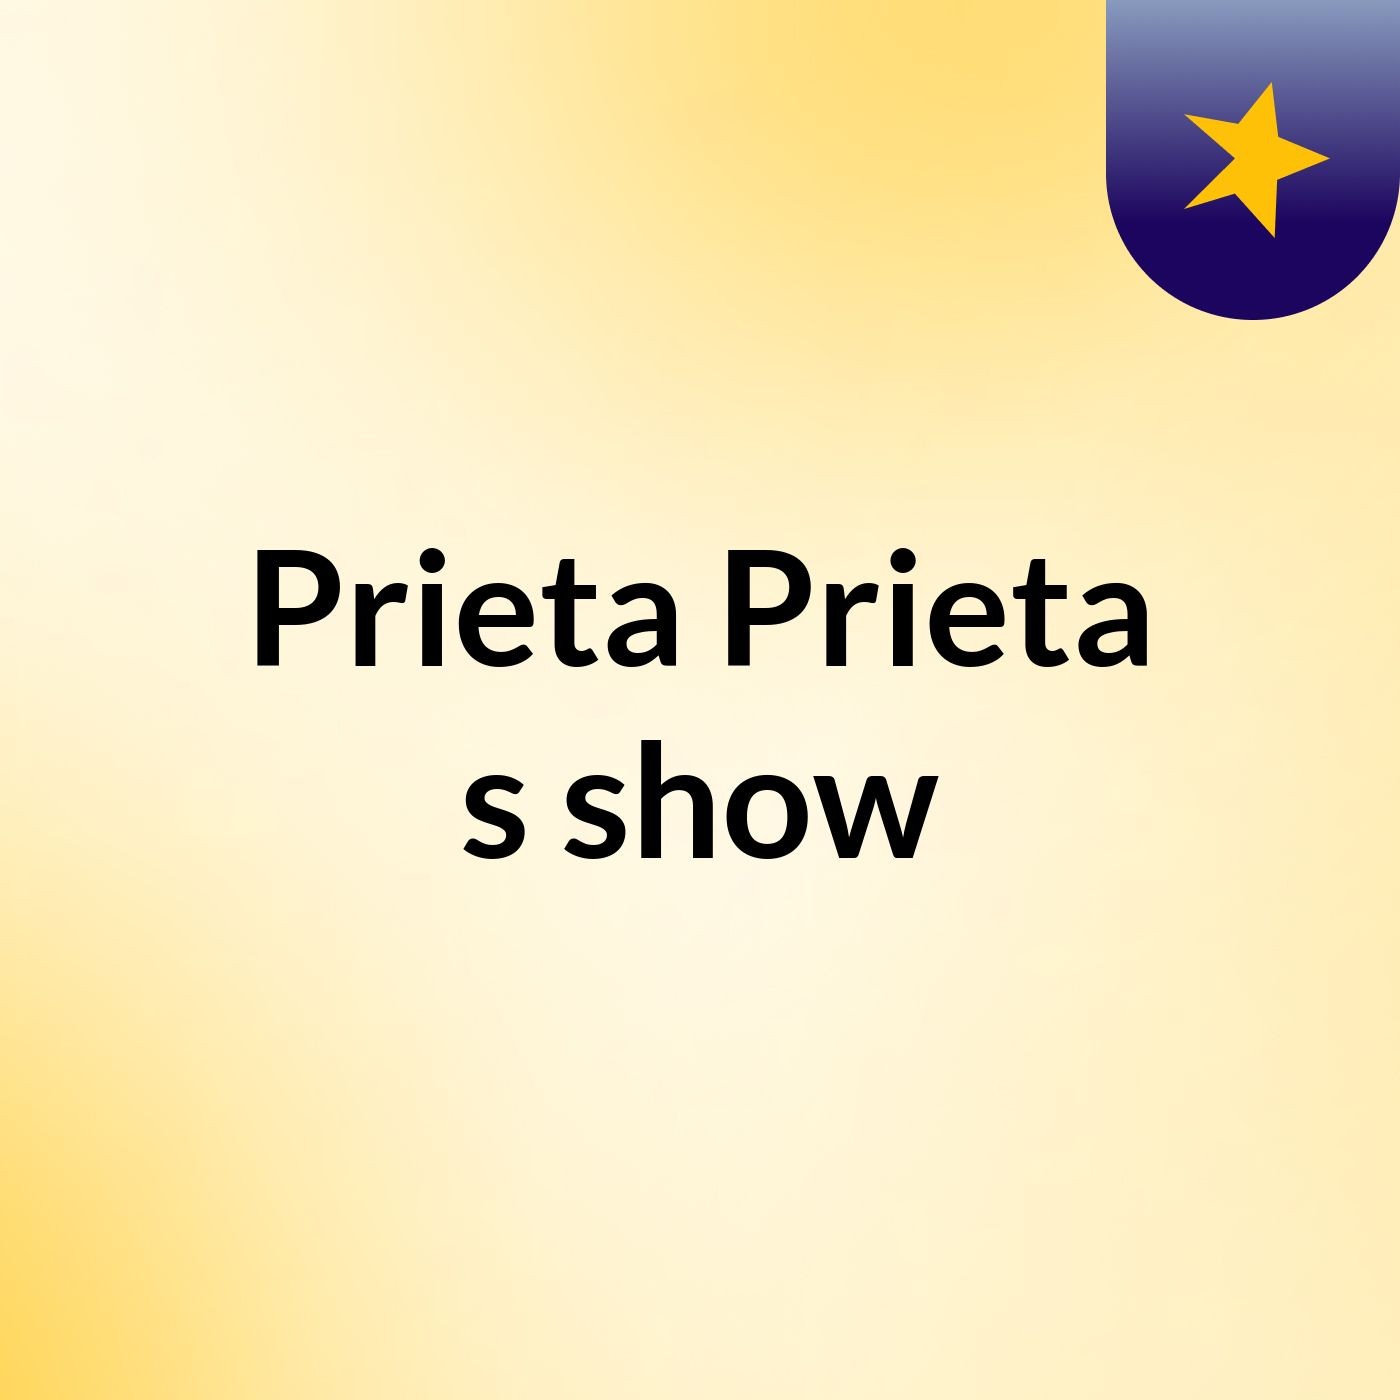 Prieta Prieta's show